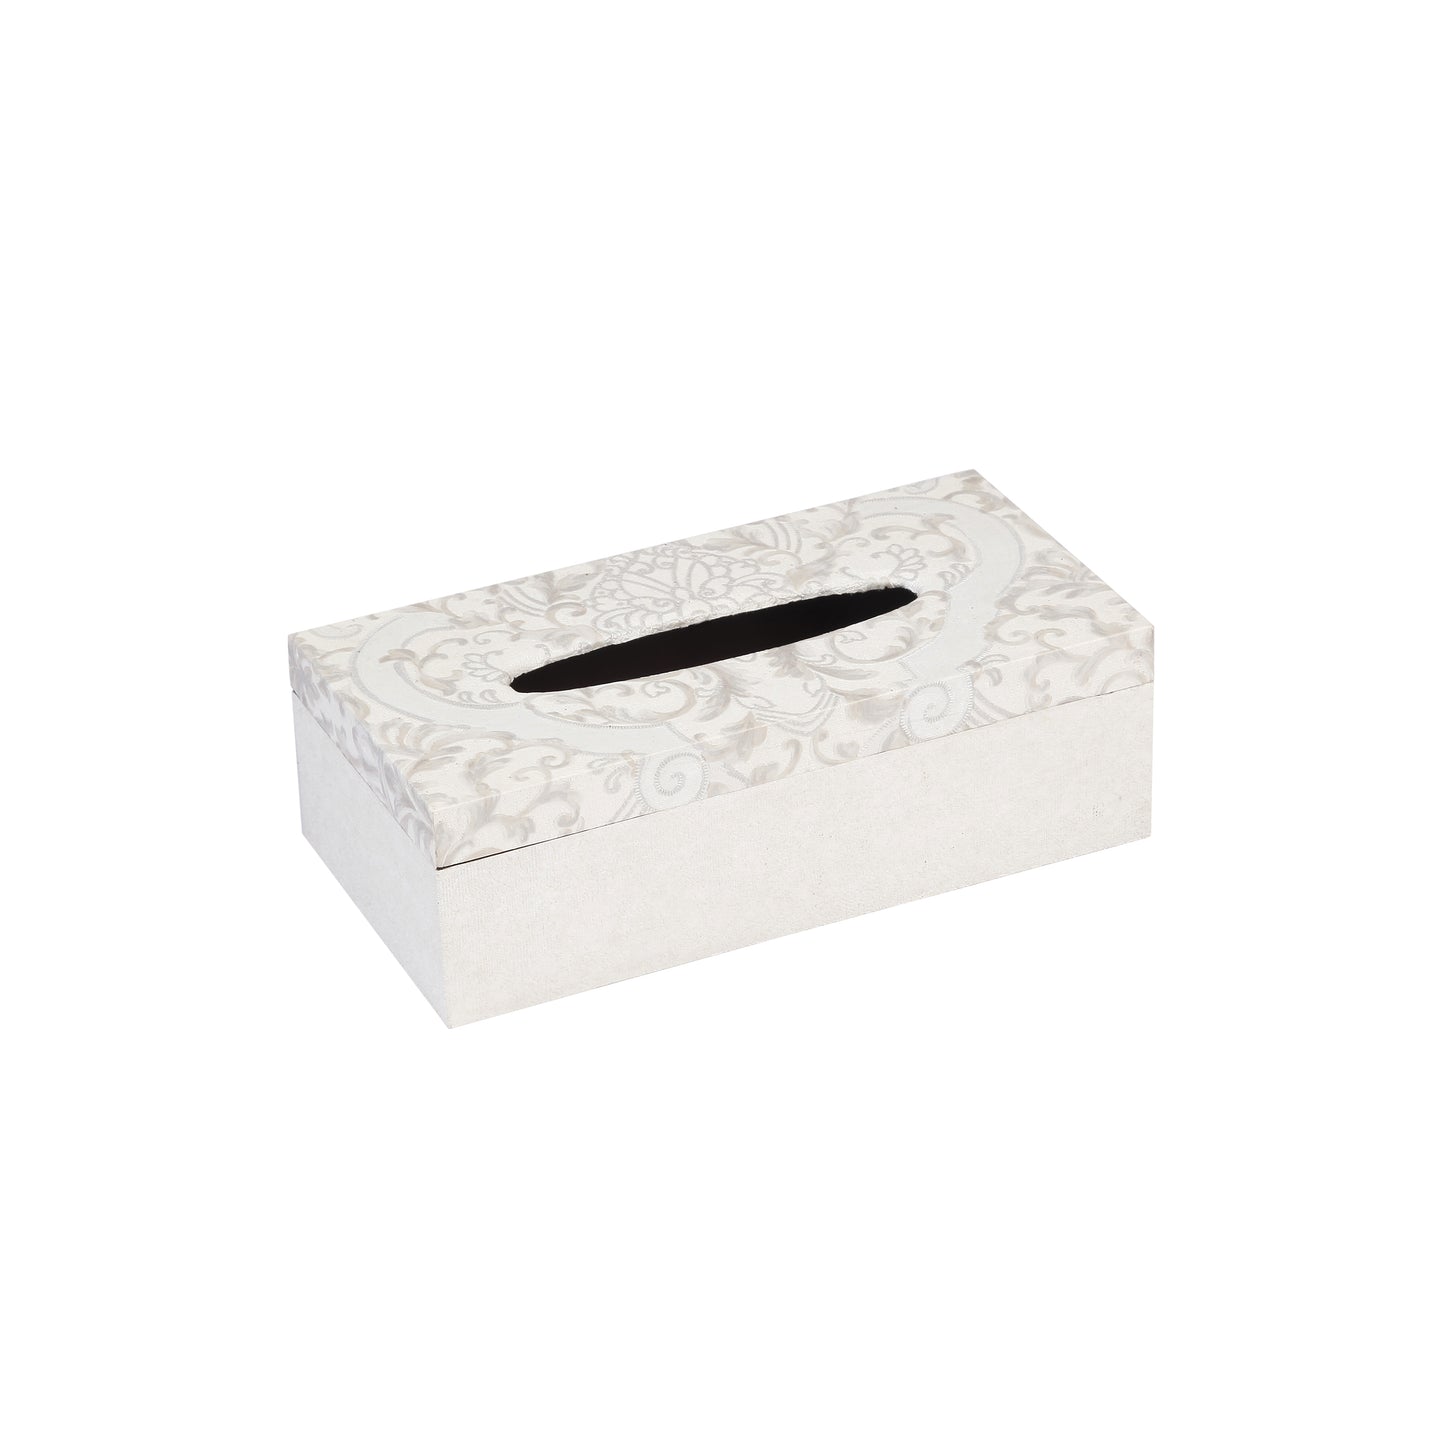 A Tiny Mistake Chantilly Rectangle Tissue Box, 26 x 13 x 8 cm